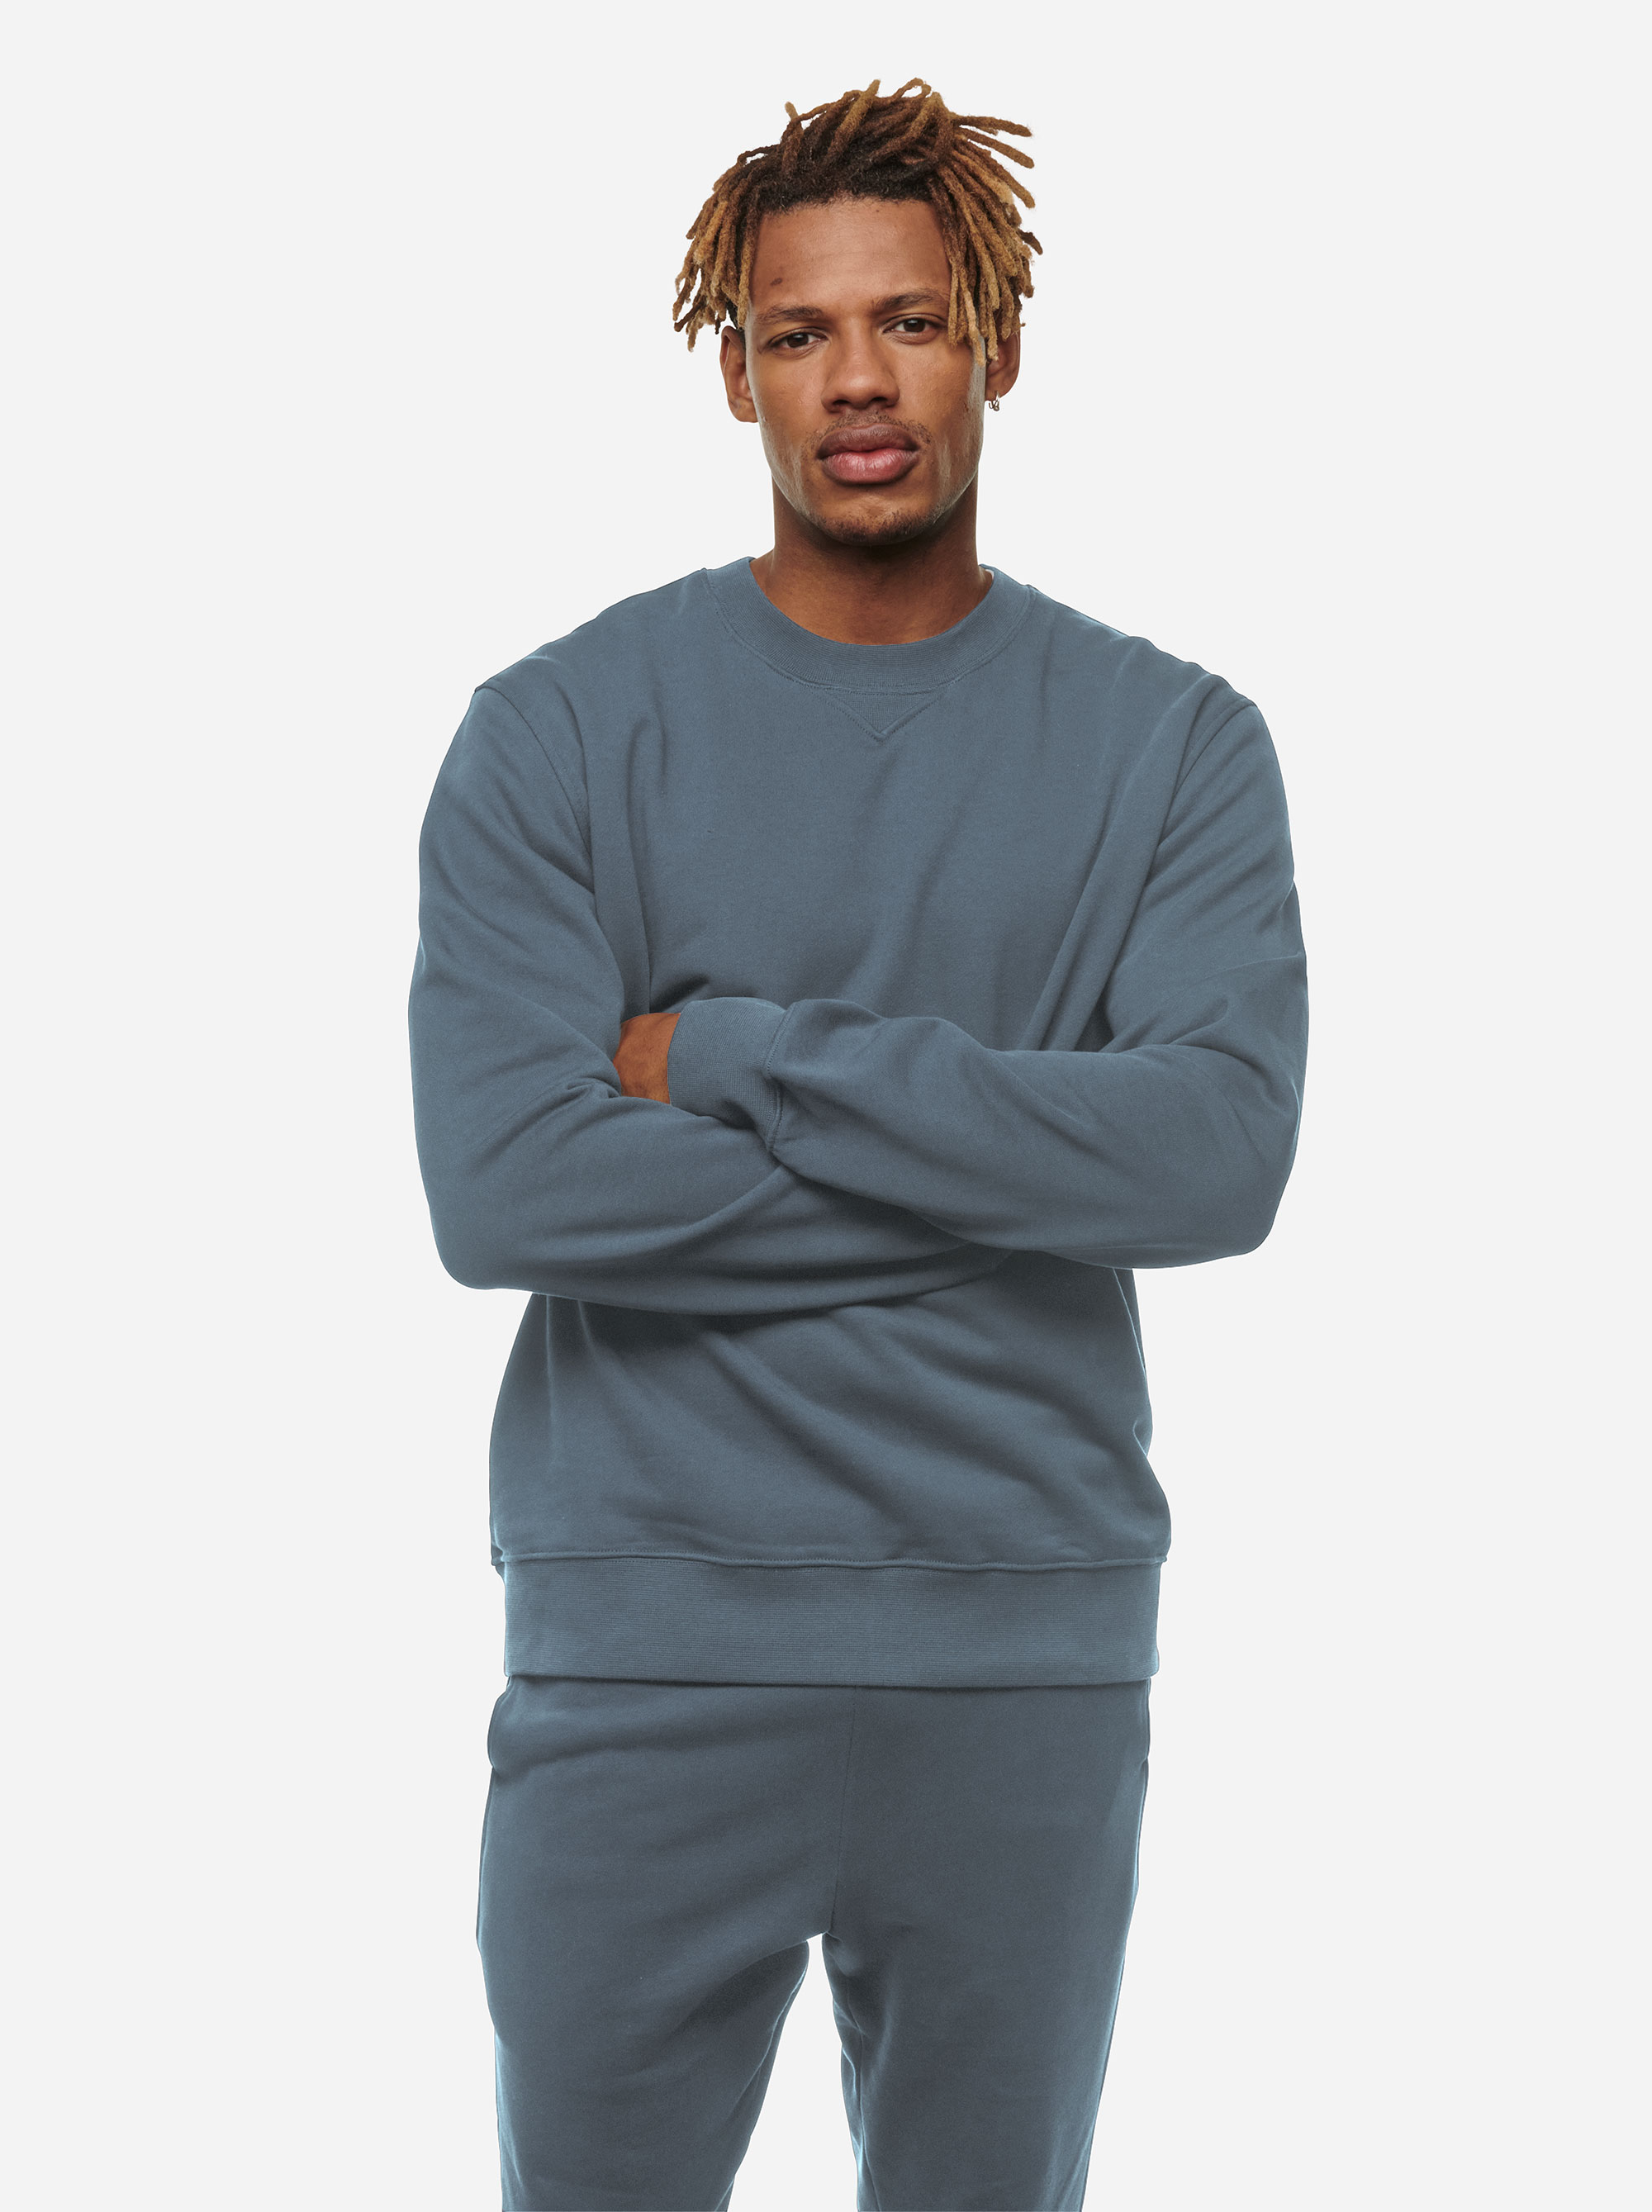 Teym - The Sweatshirt - Men - Blue Grey - 1